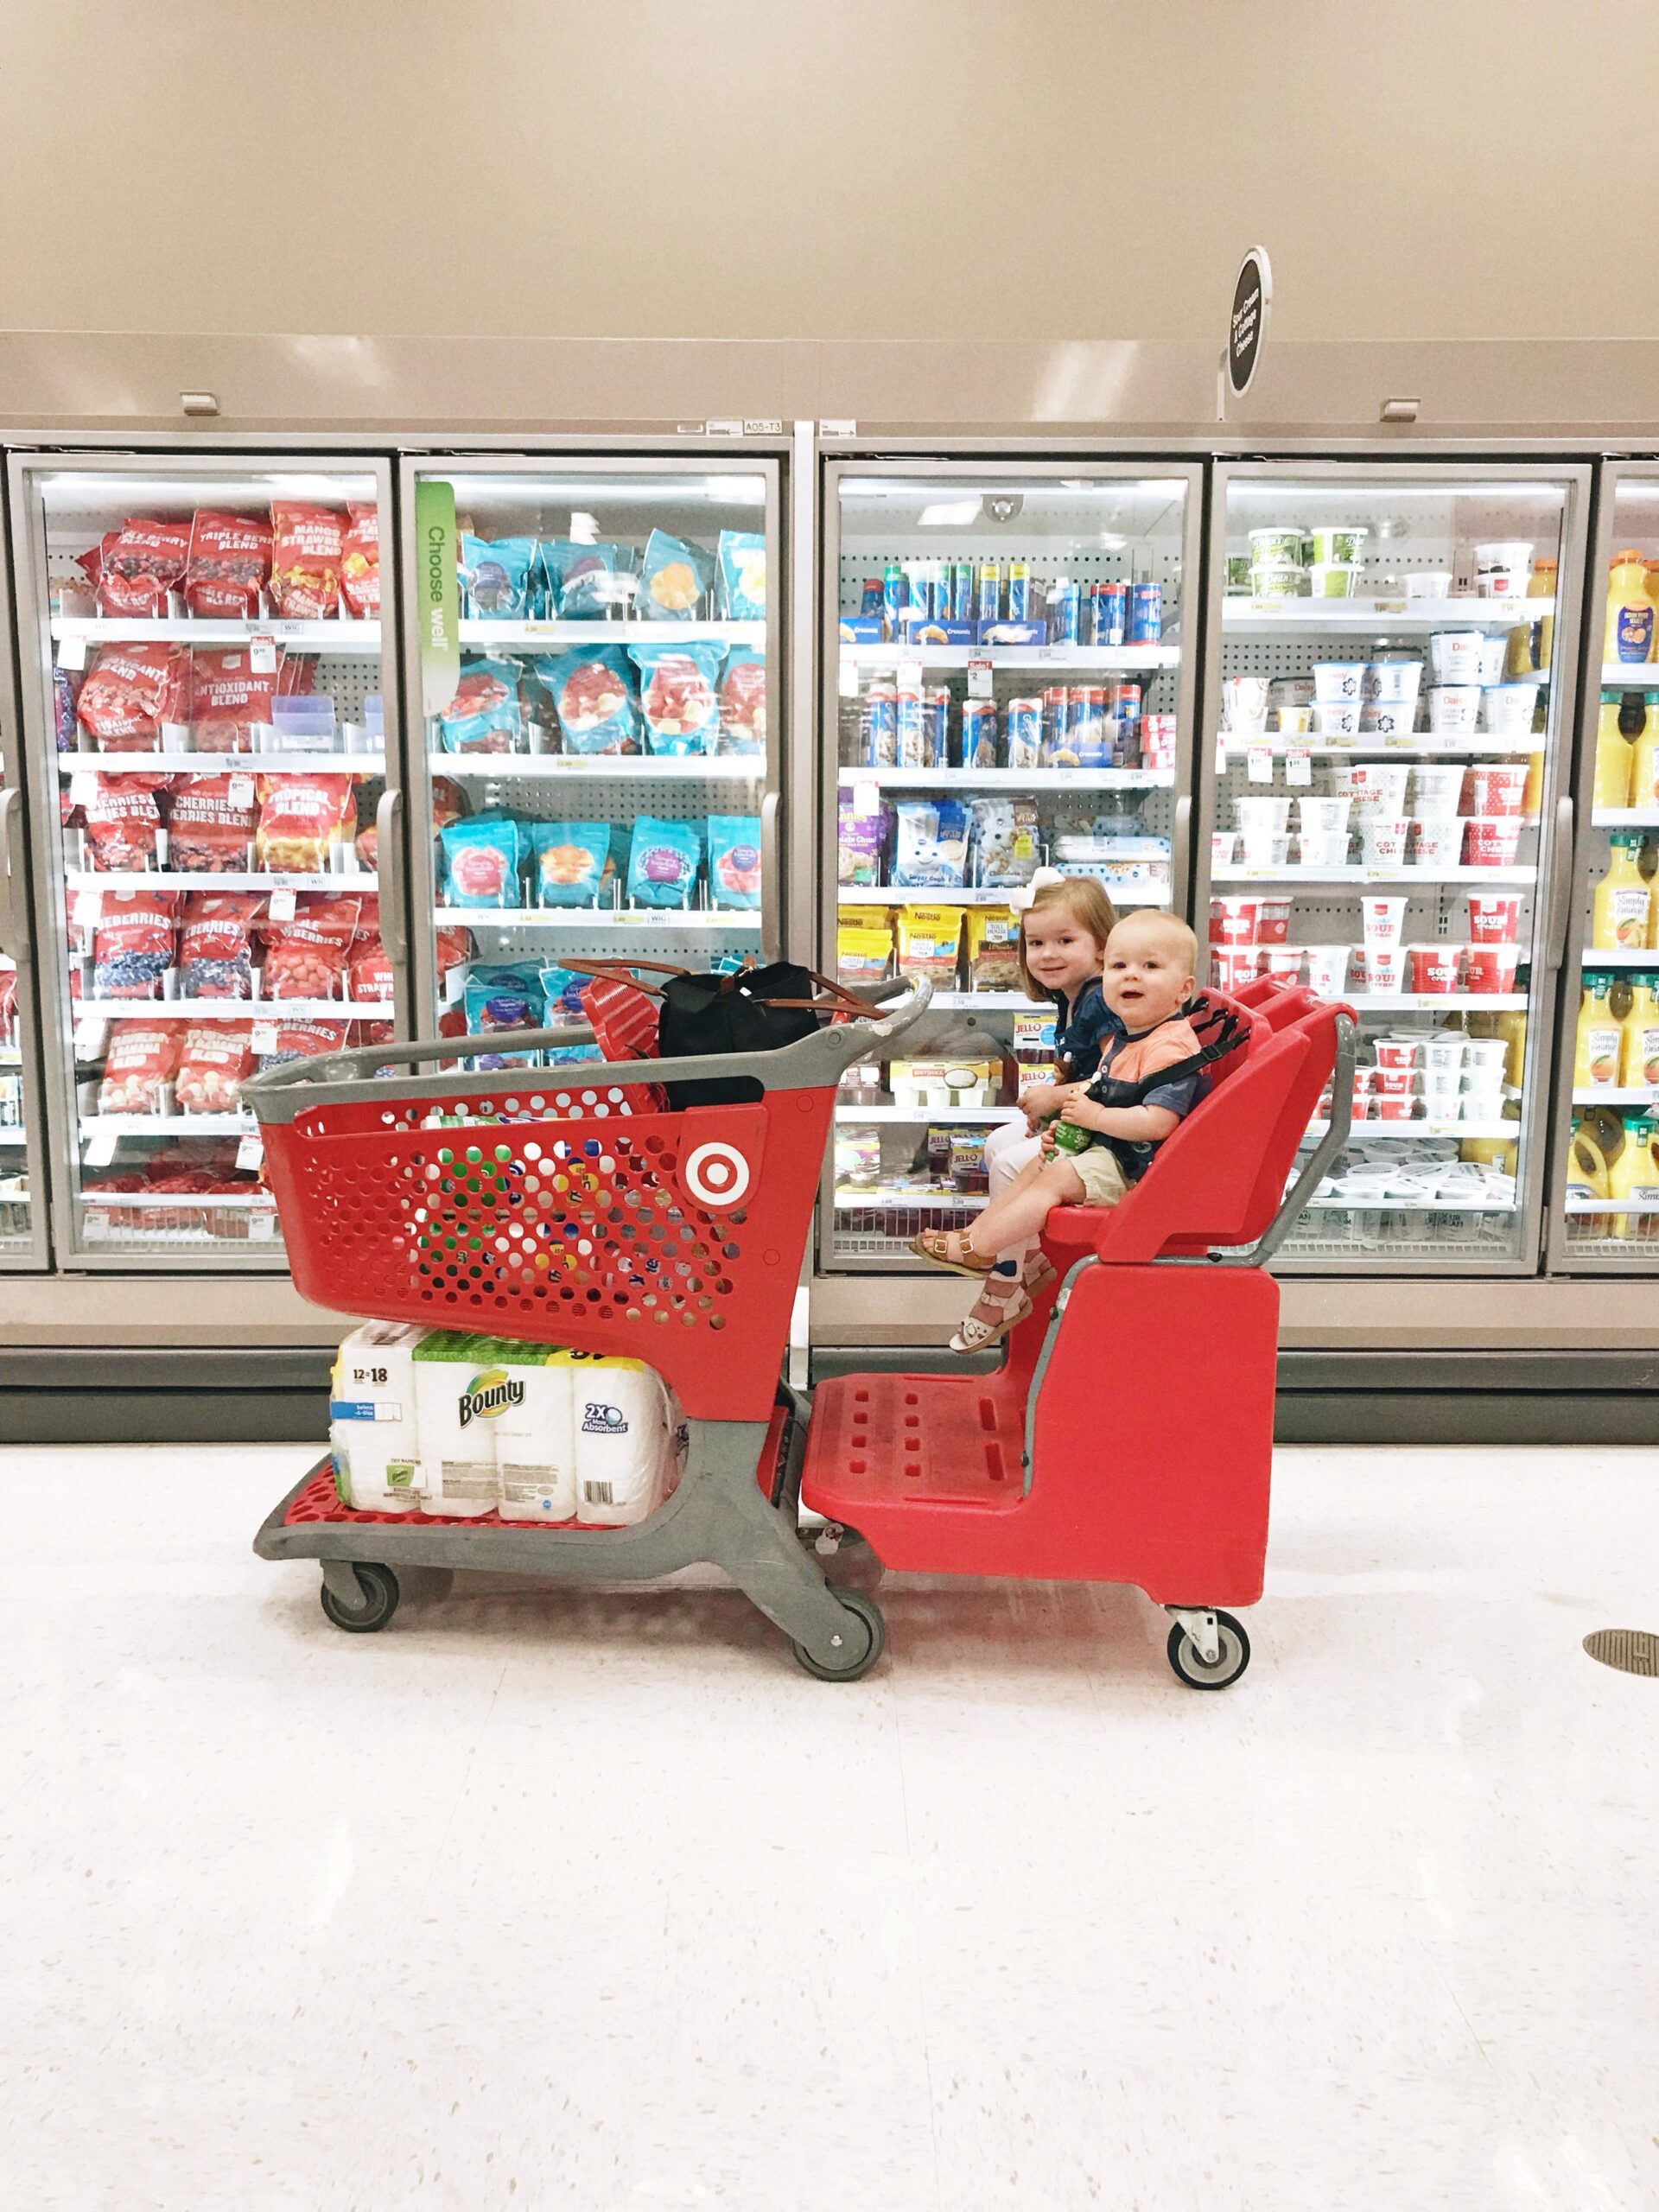 Driving the “Mac truck” shopping cart at Target